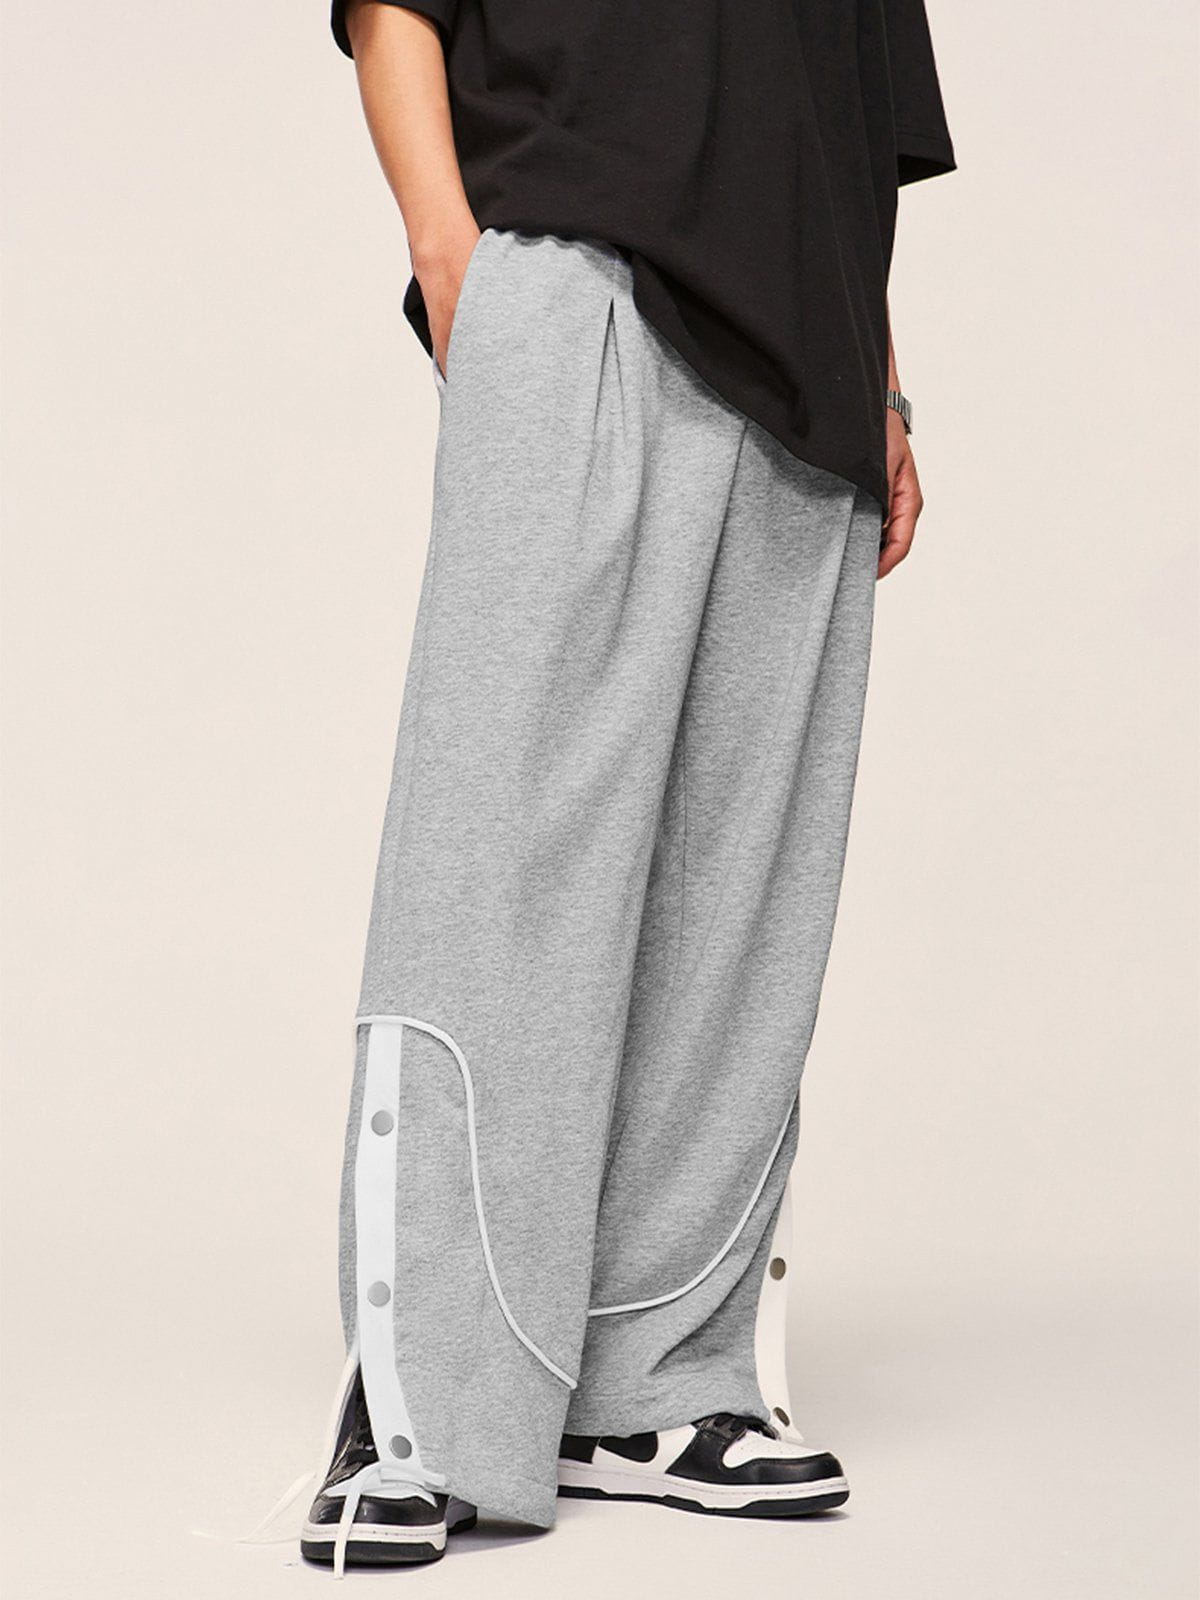 Majesda® - Stripe Buckle Drawstring Sweatpants outfit ideas streetwear fashion